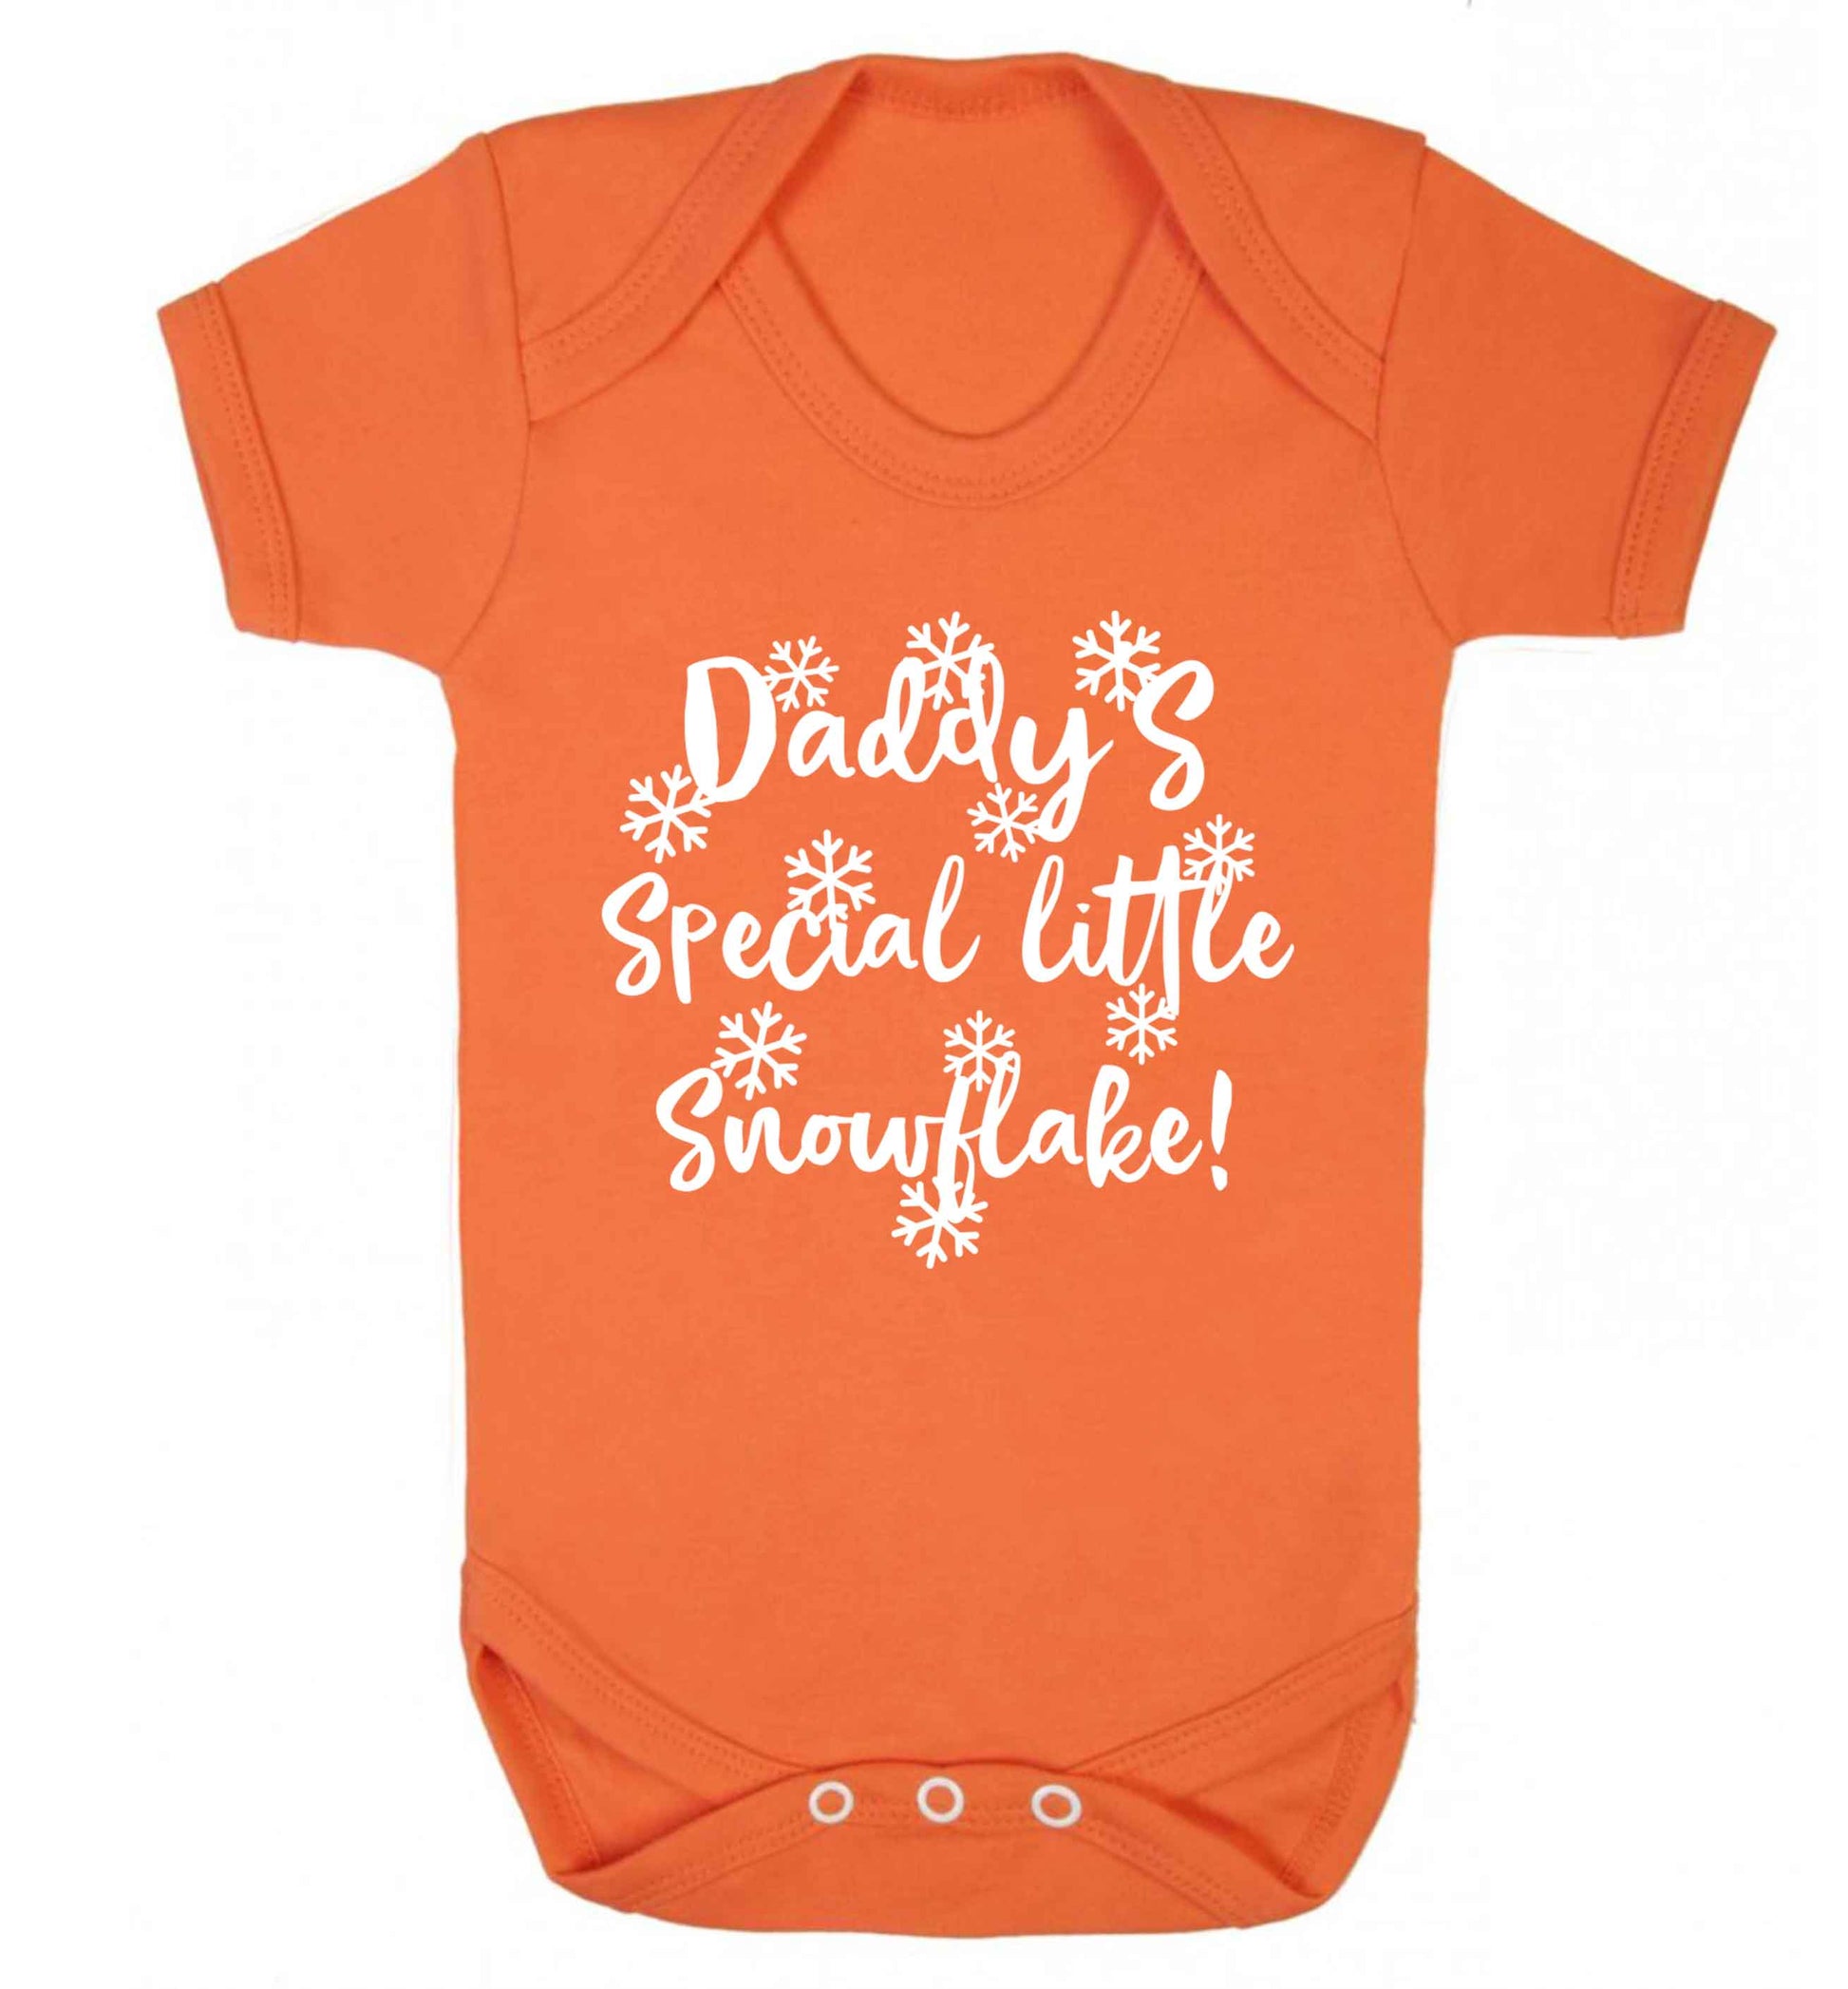 Daddy's special little snowflake Baby Vest orange 18-24 months